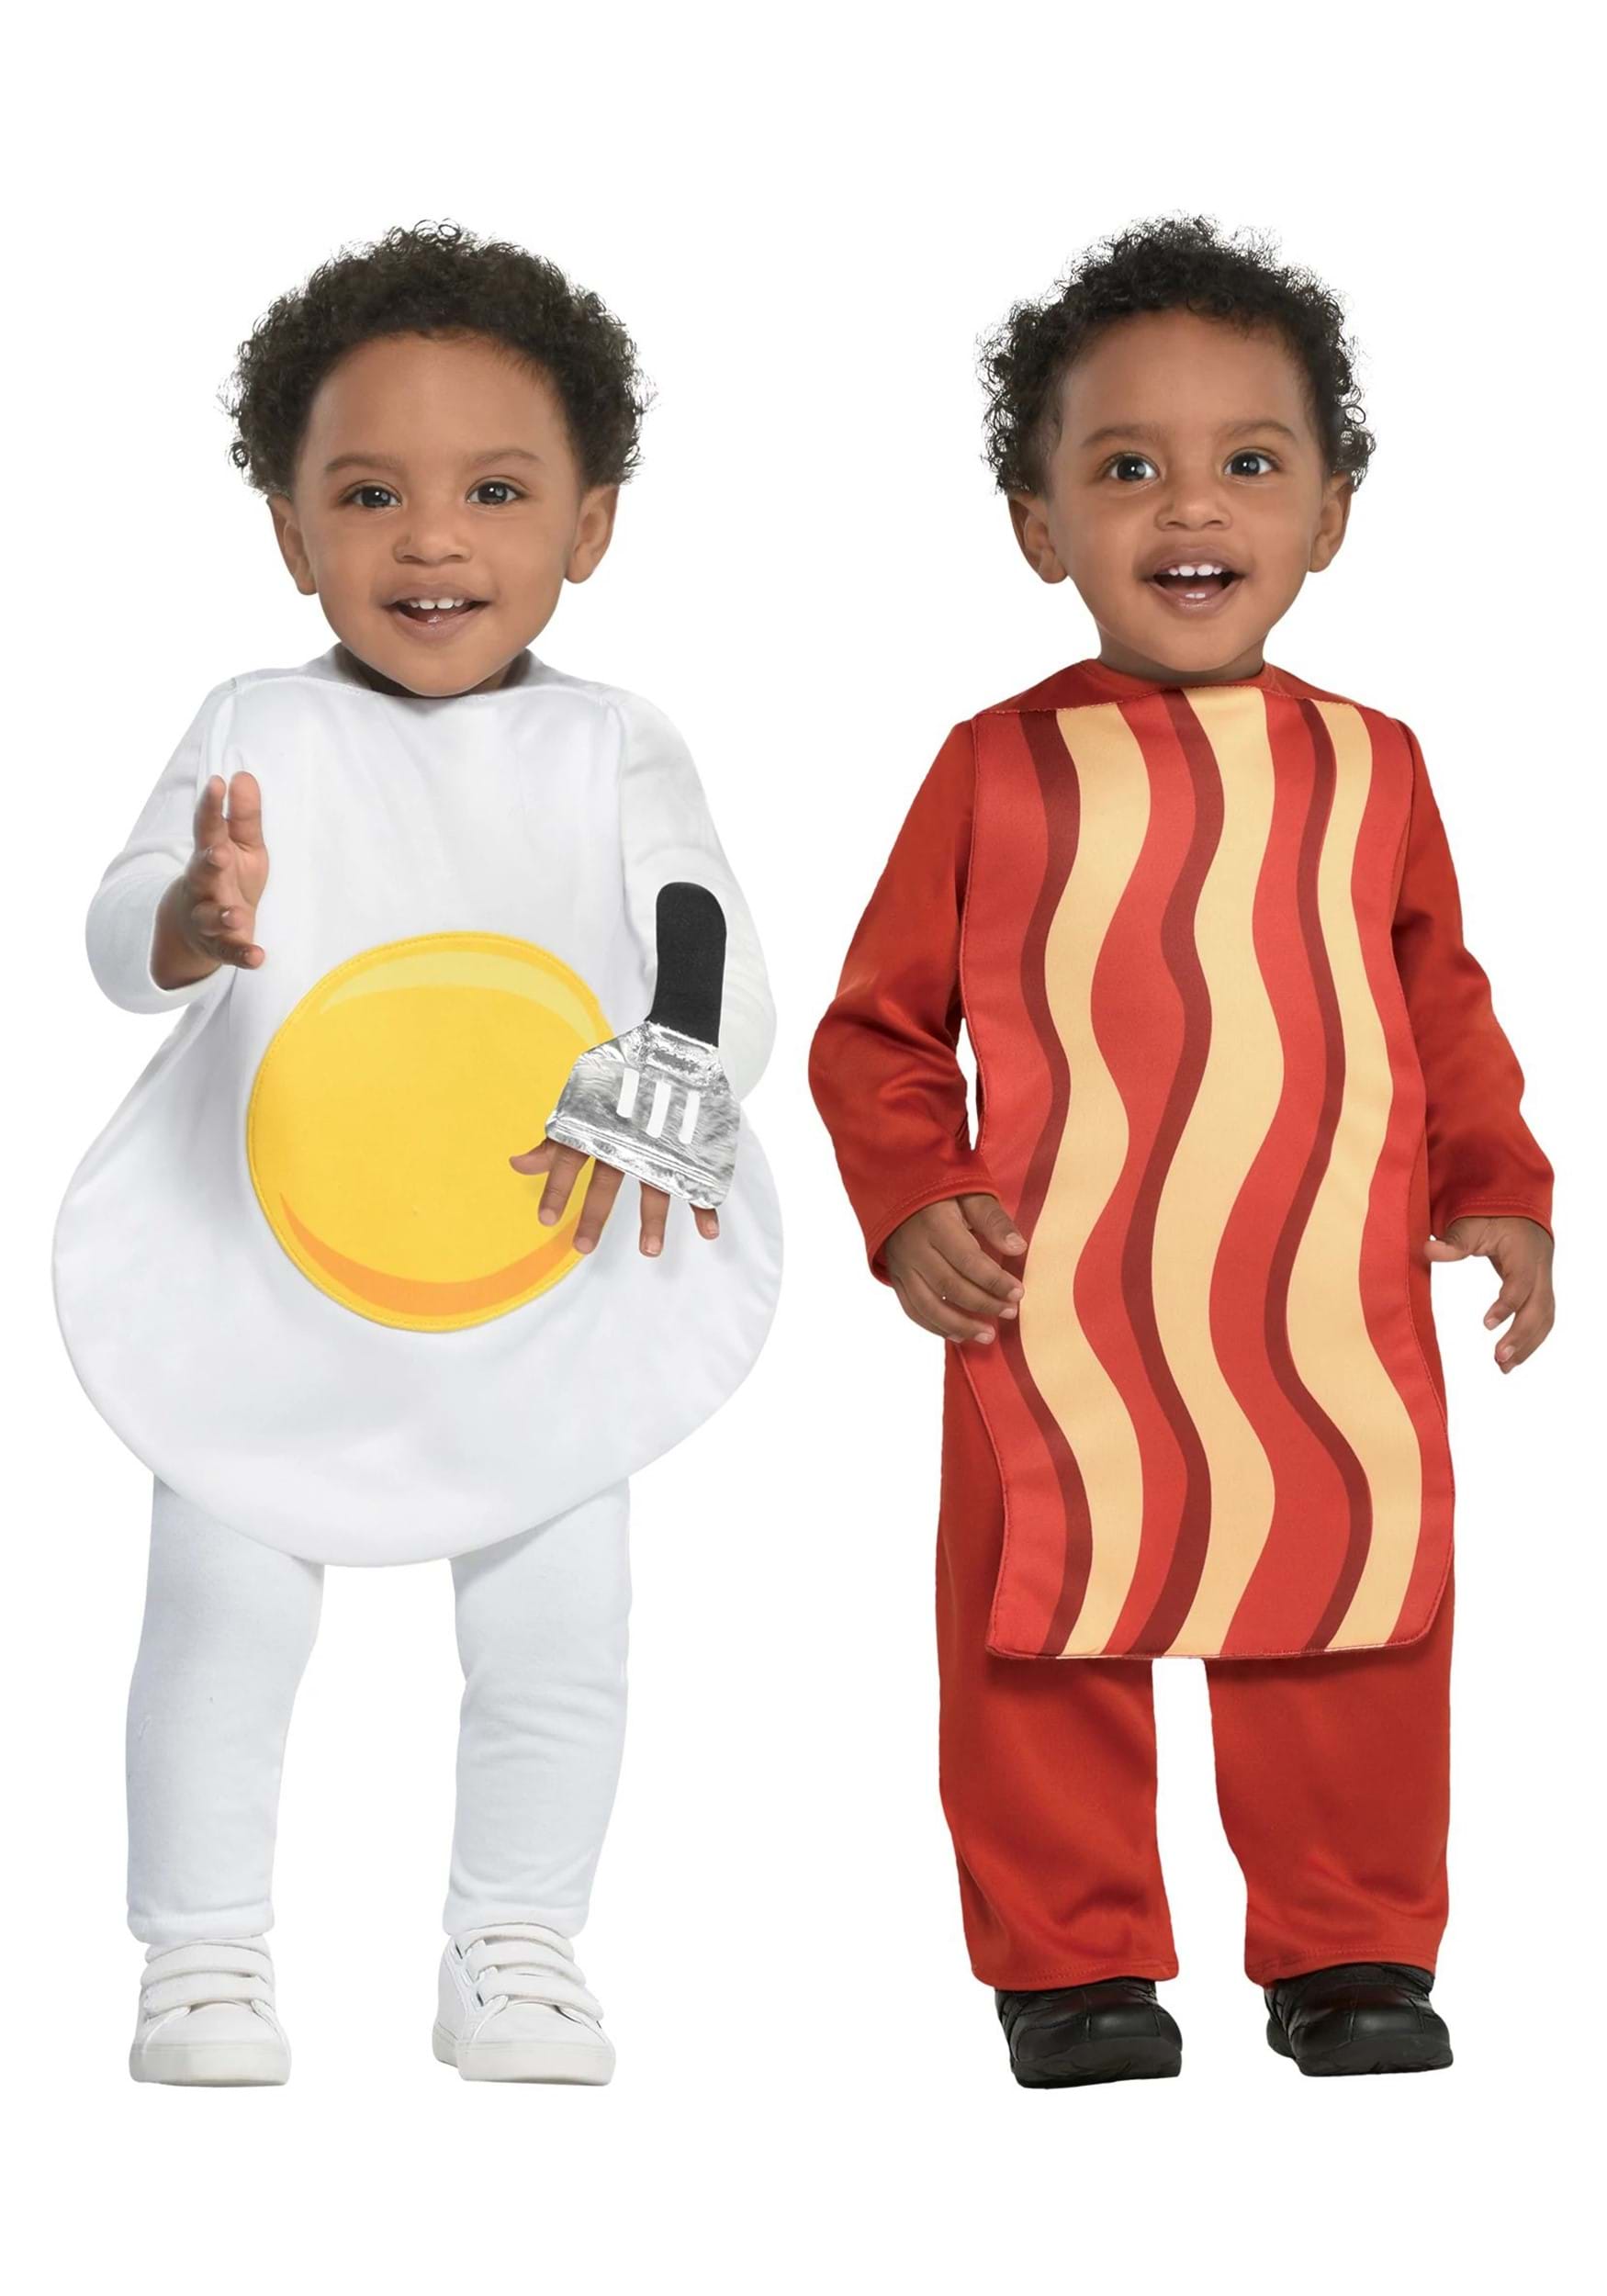 Bacon & Eggs Breakfast Babies Costumes